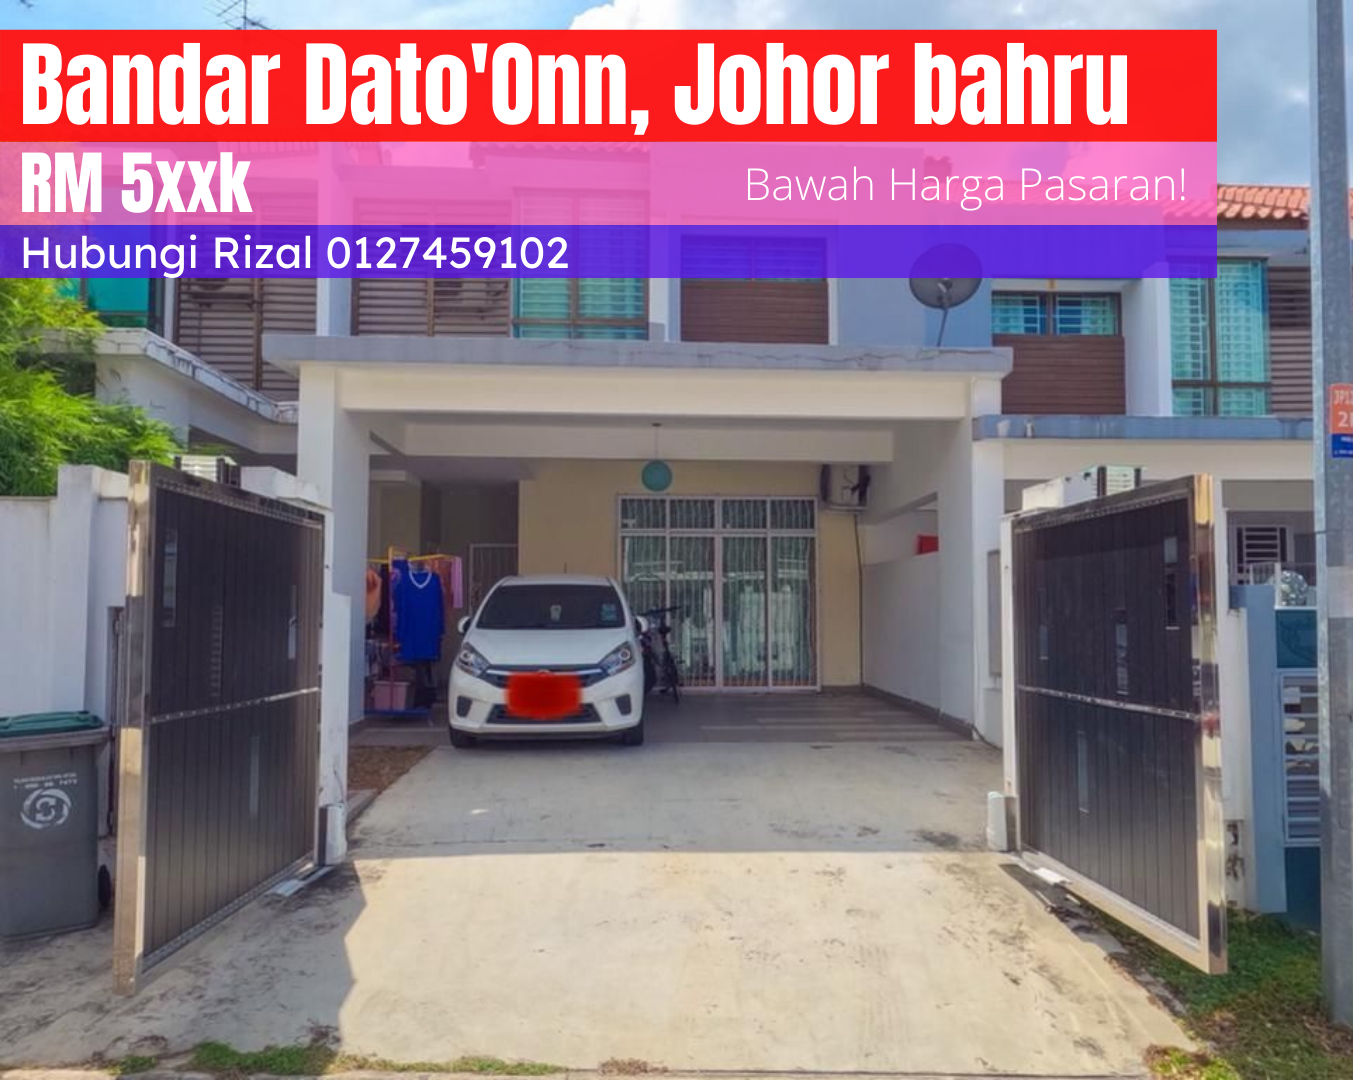 Perjiranan 1x, Bandar Dato` Onn, Johor Bahru